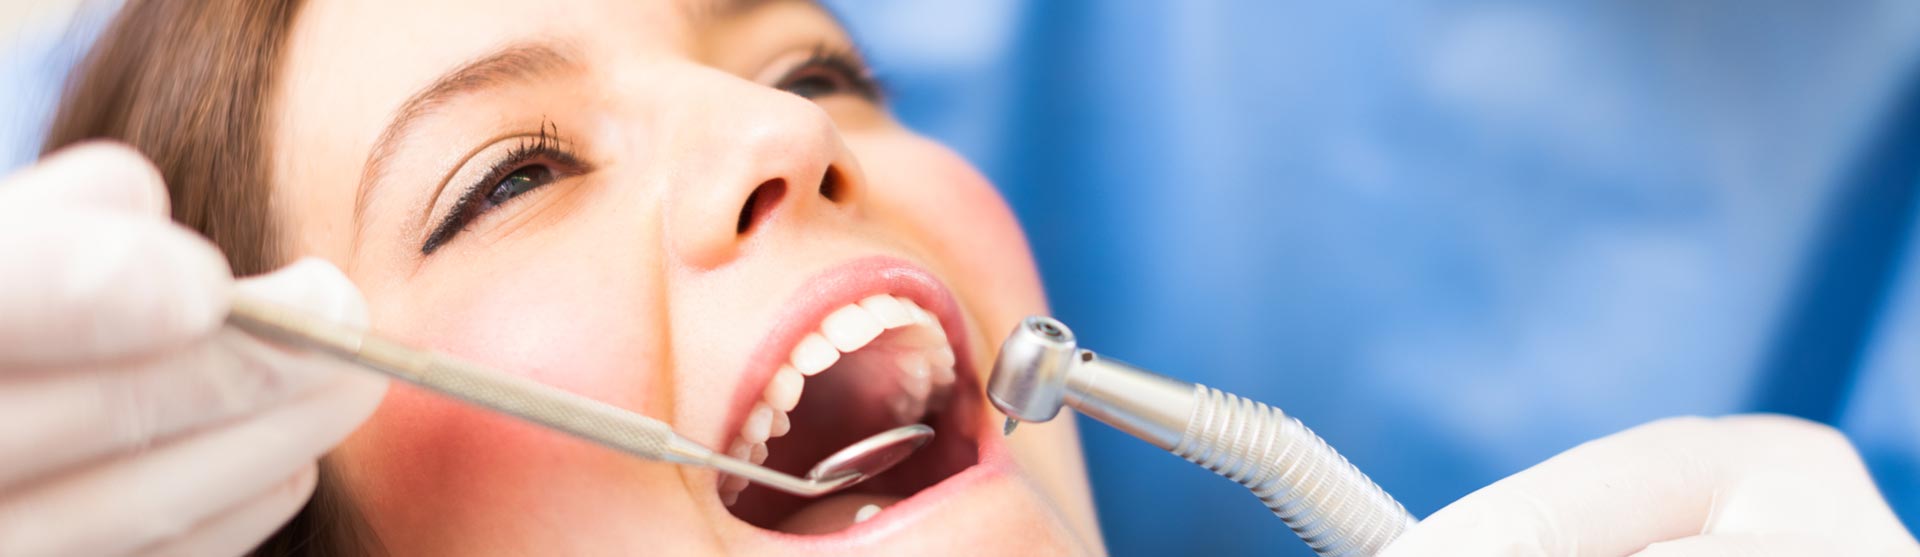 Dentist doing composite fillings treatment